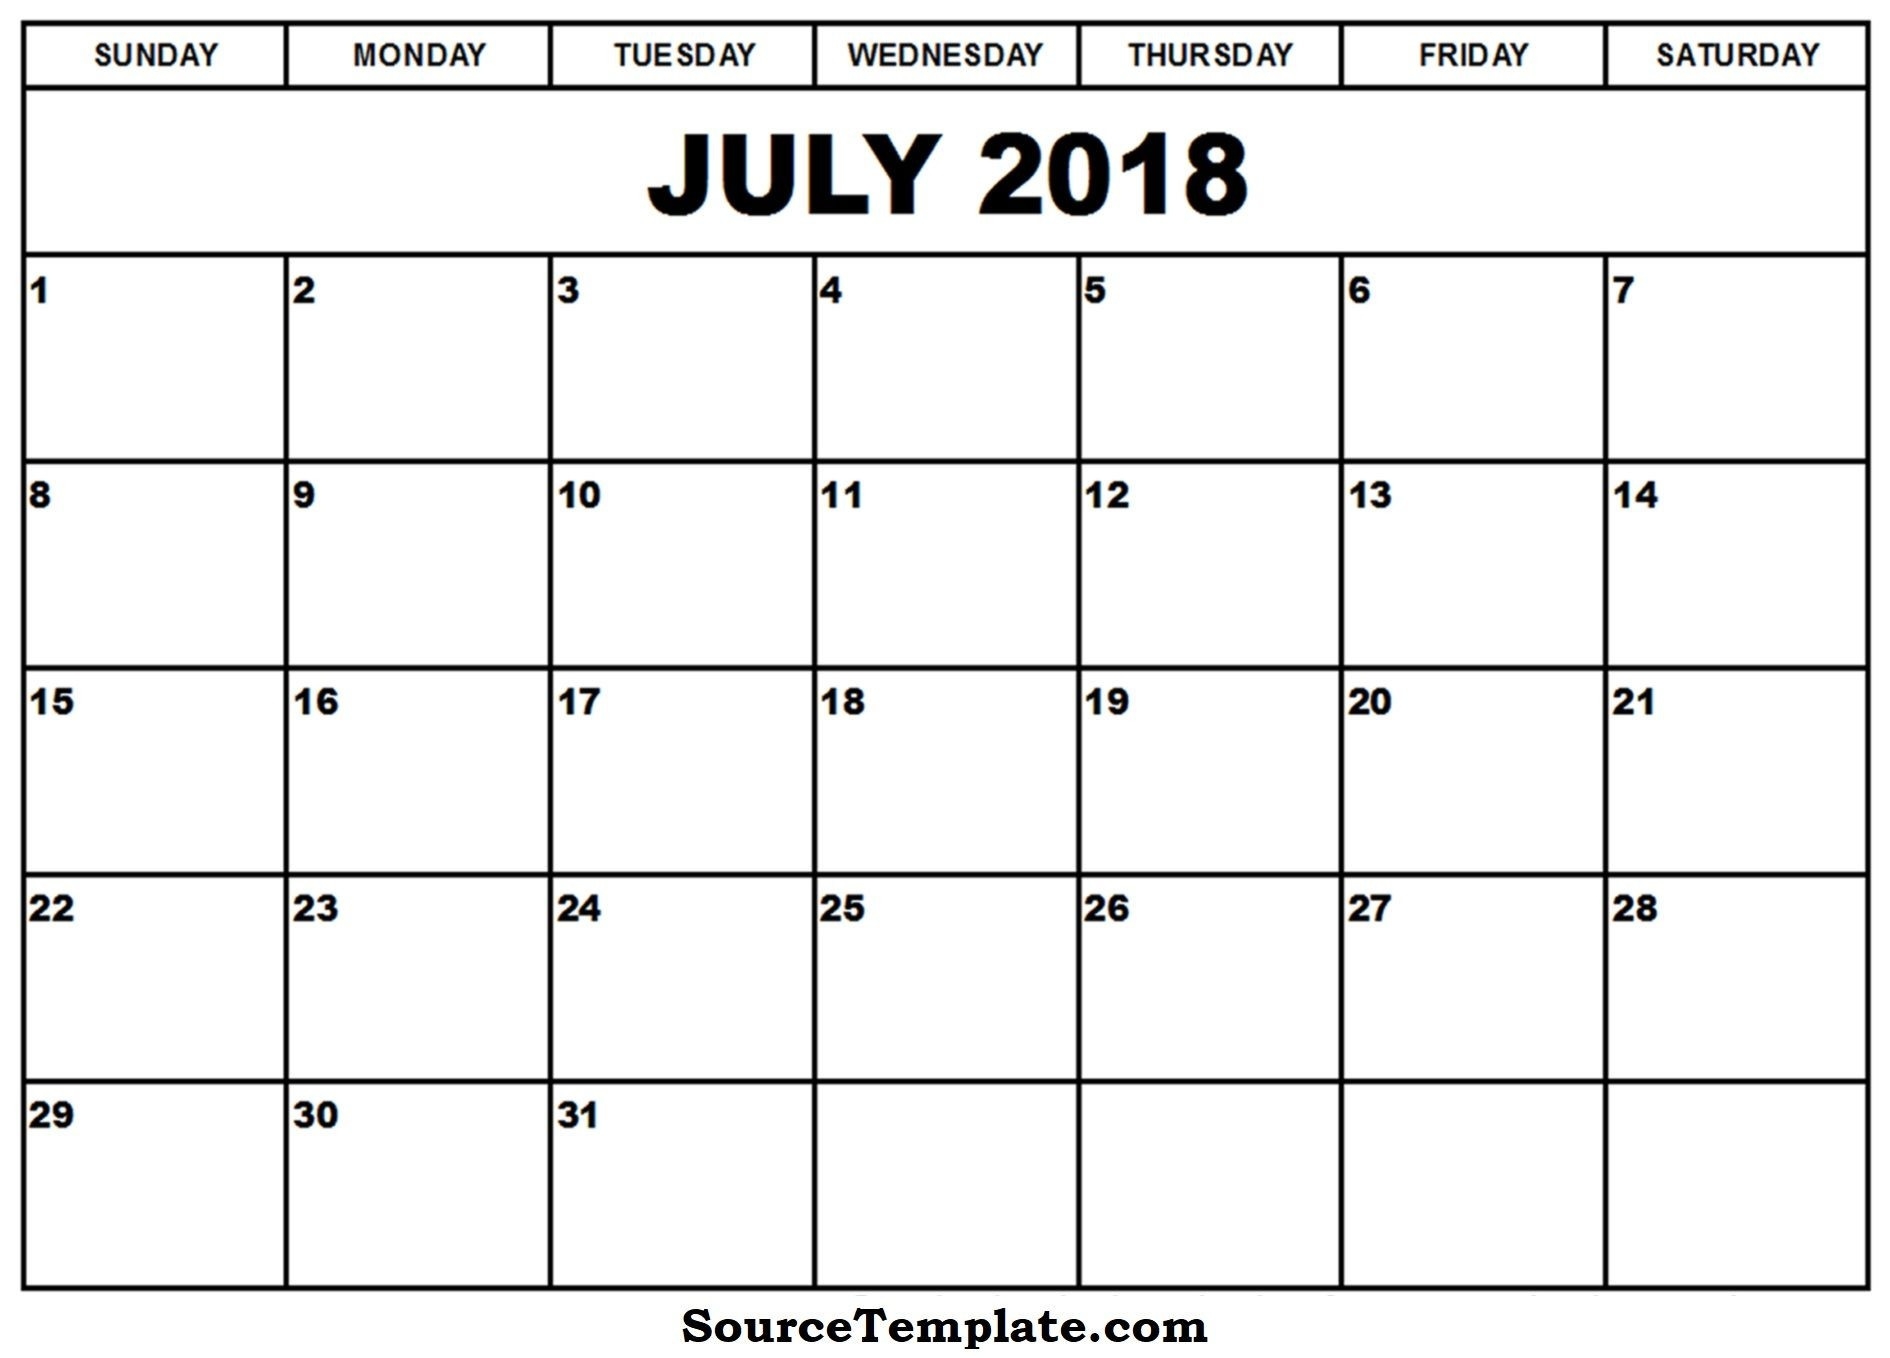 Free 5 July 2018 Calendar Printable Template Source Template 2018  Free Calendar Templates For The Blind